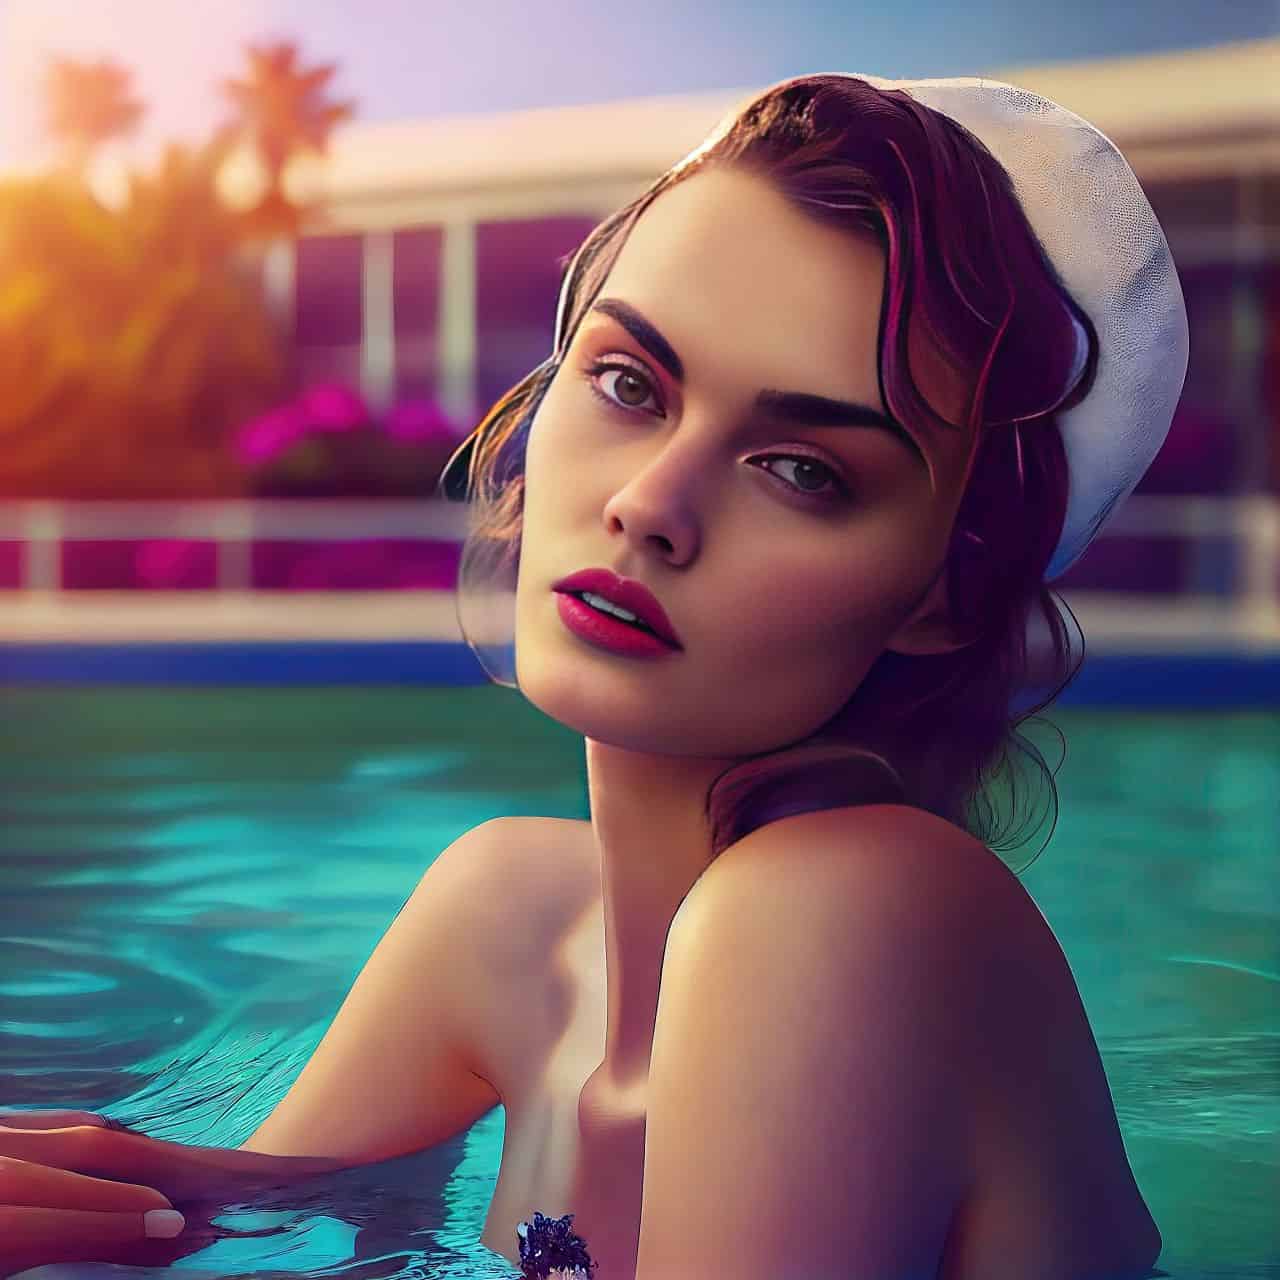 model in a pool